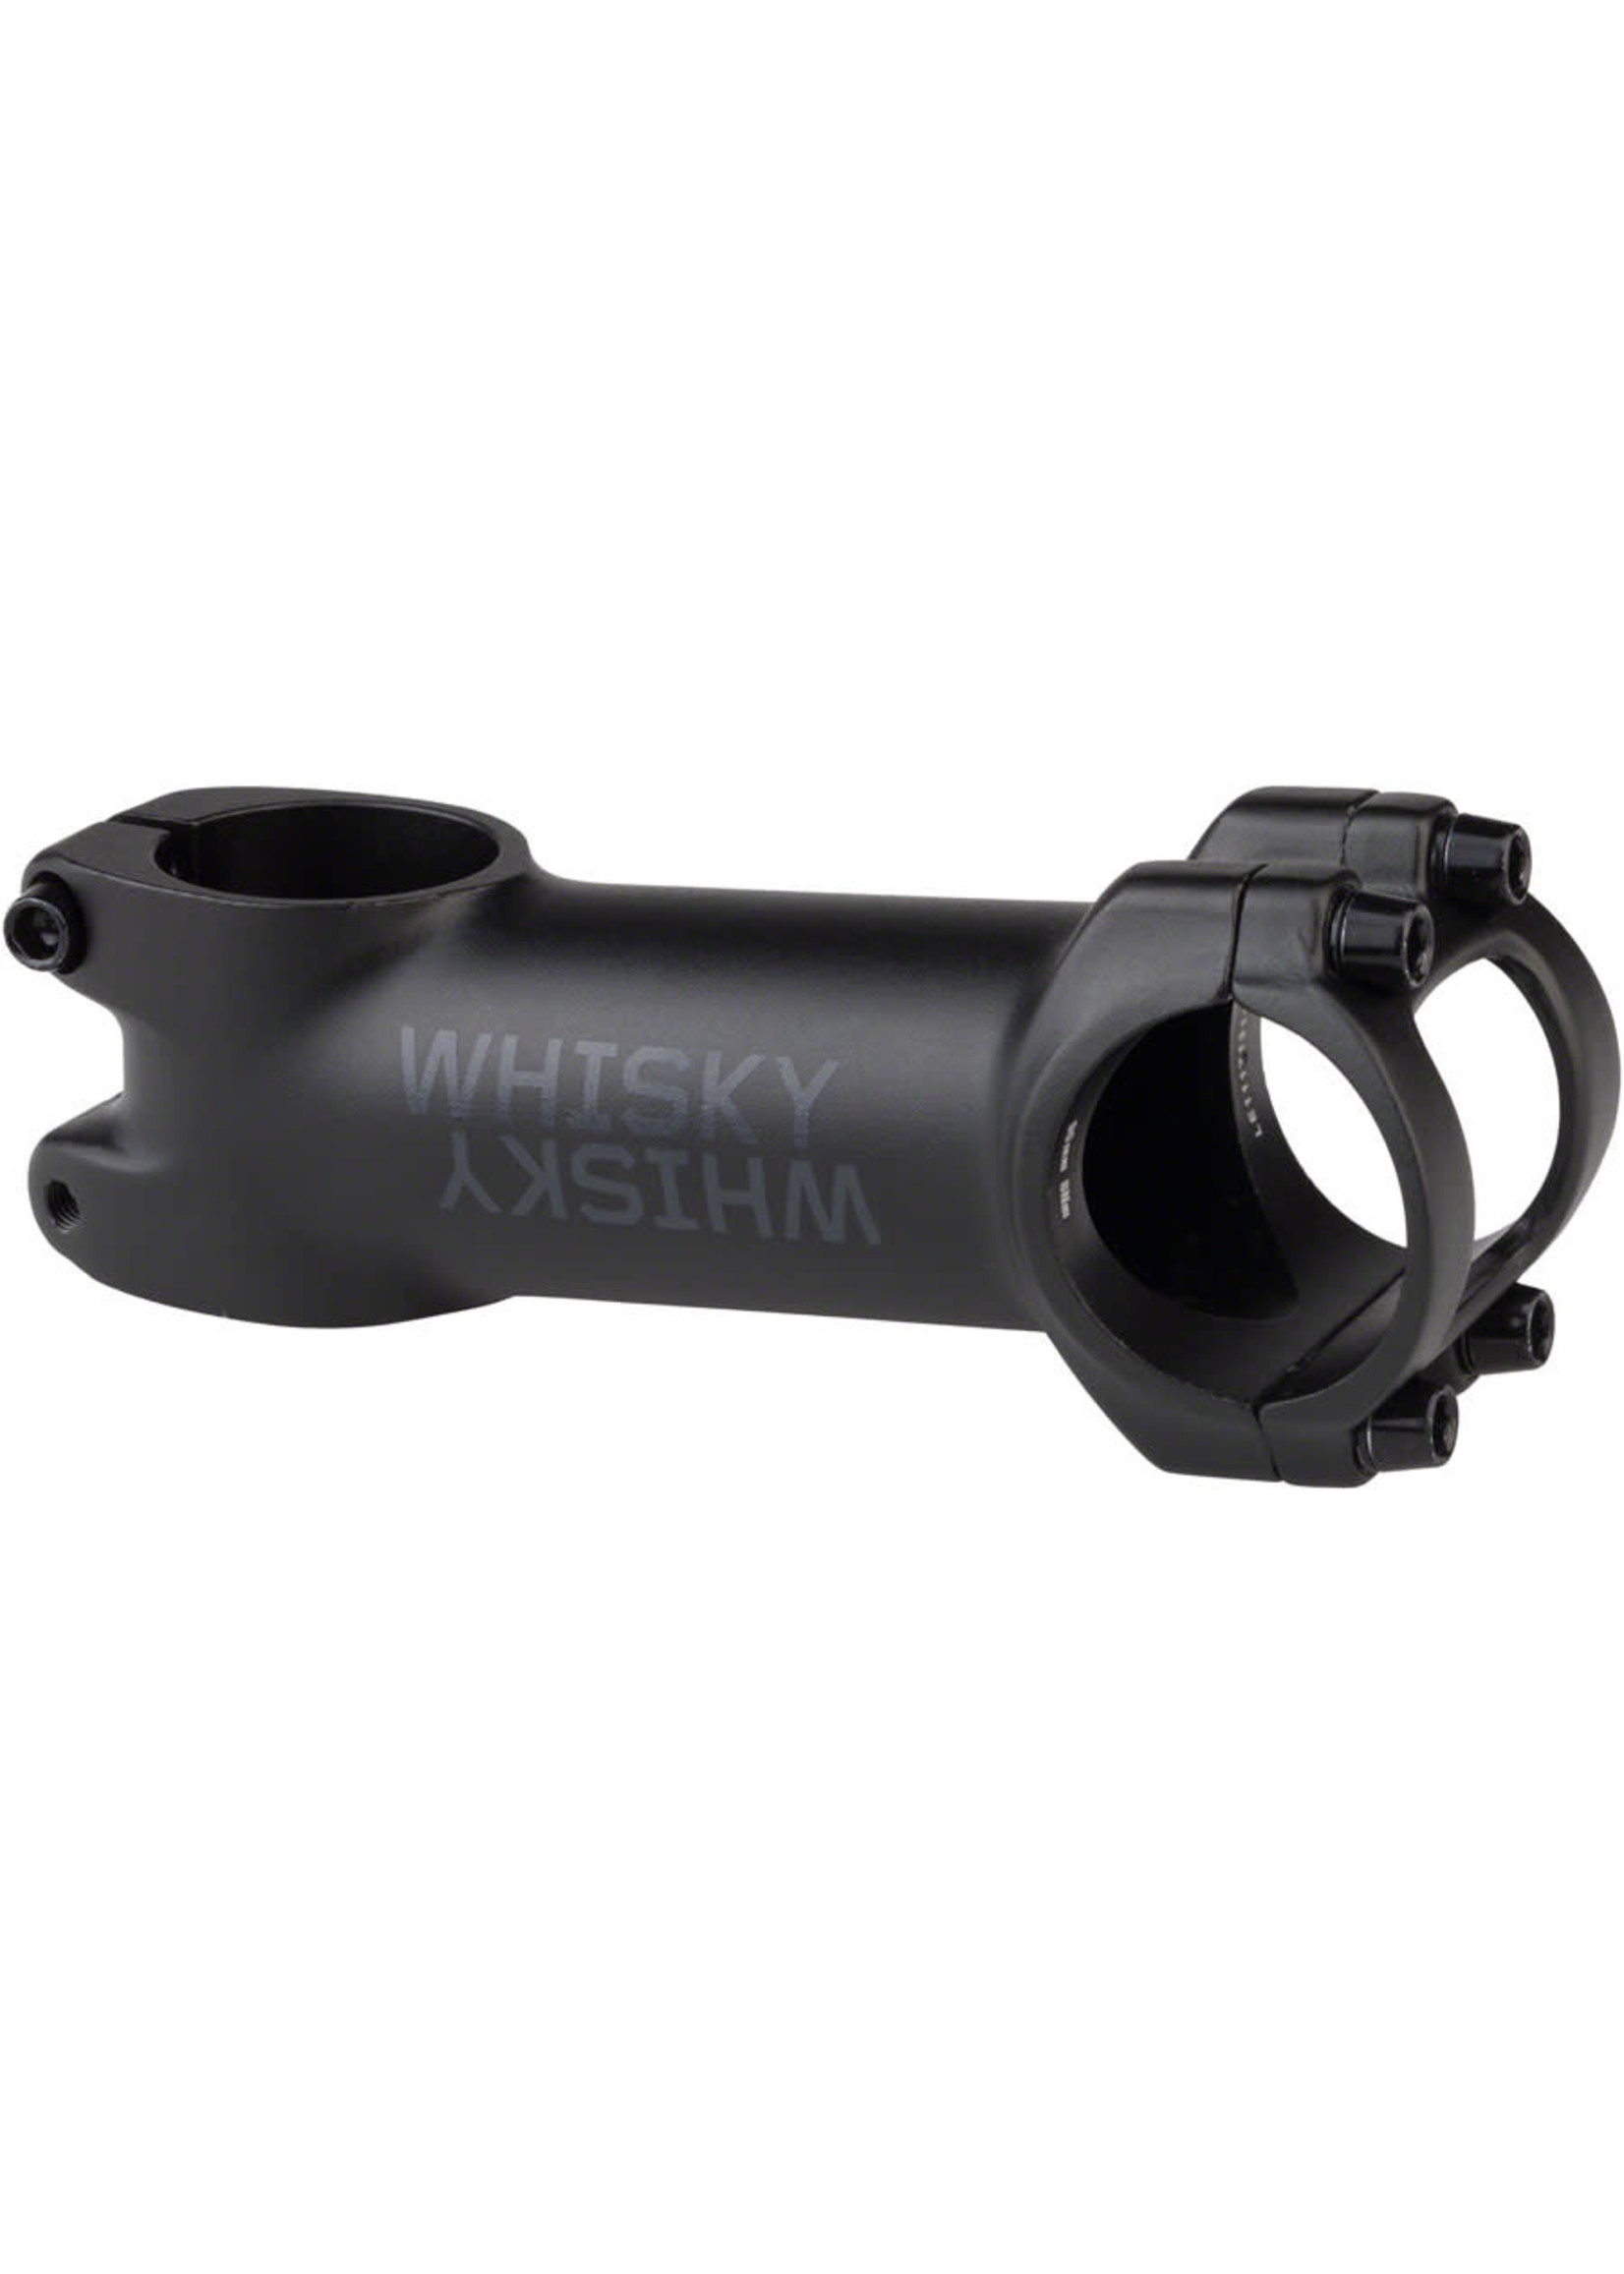 Whiskey Parts Co. WHISKY No.7 Stem - 120mm